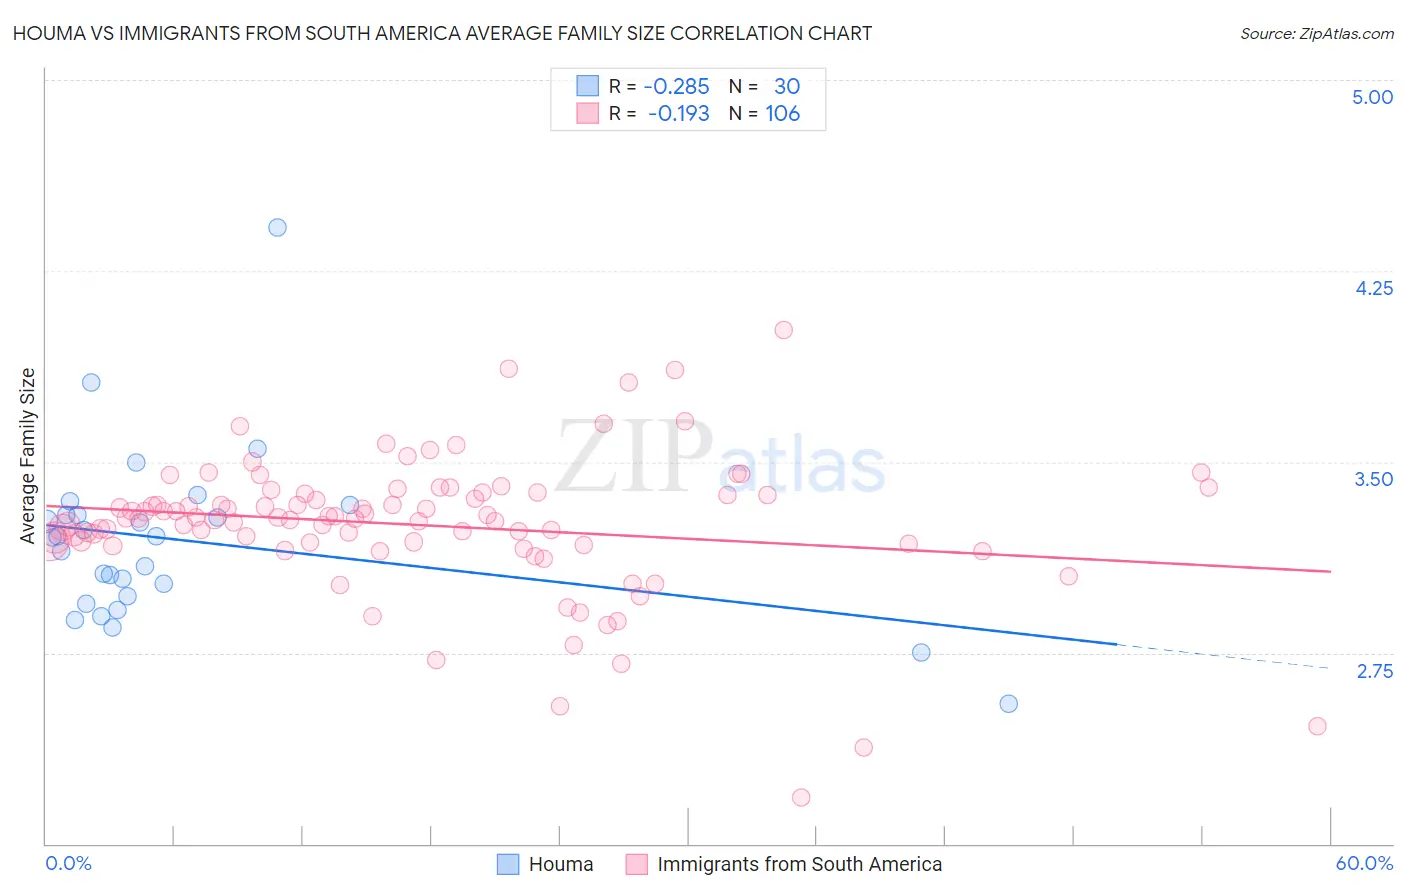 Houma vs Immigrants from South America Average Family Size